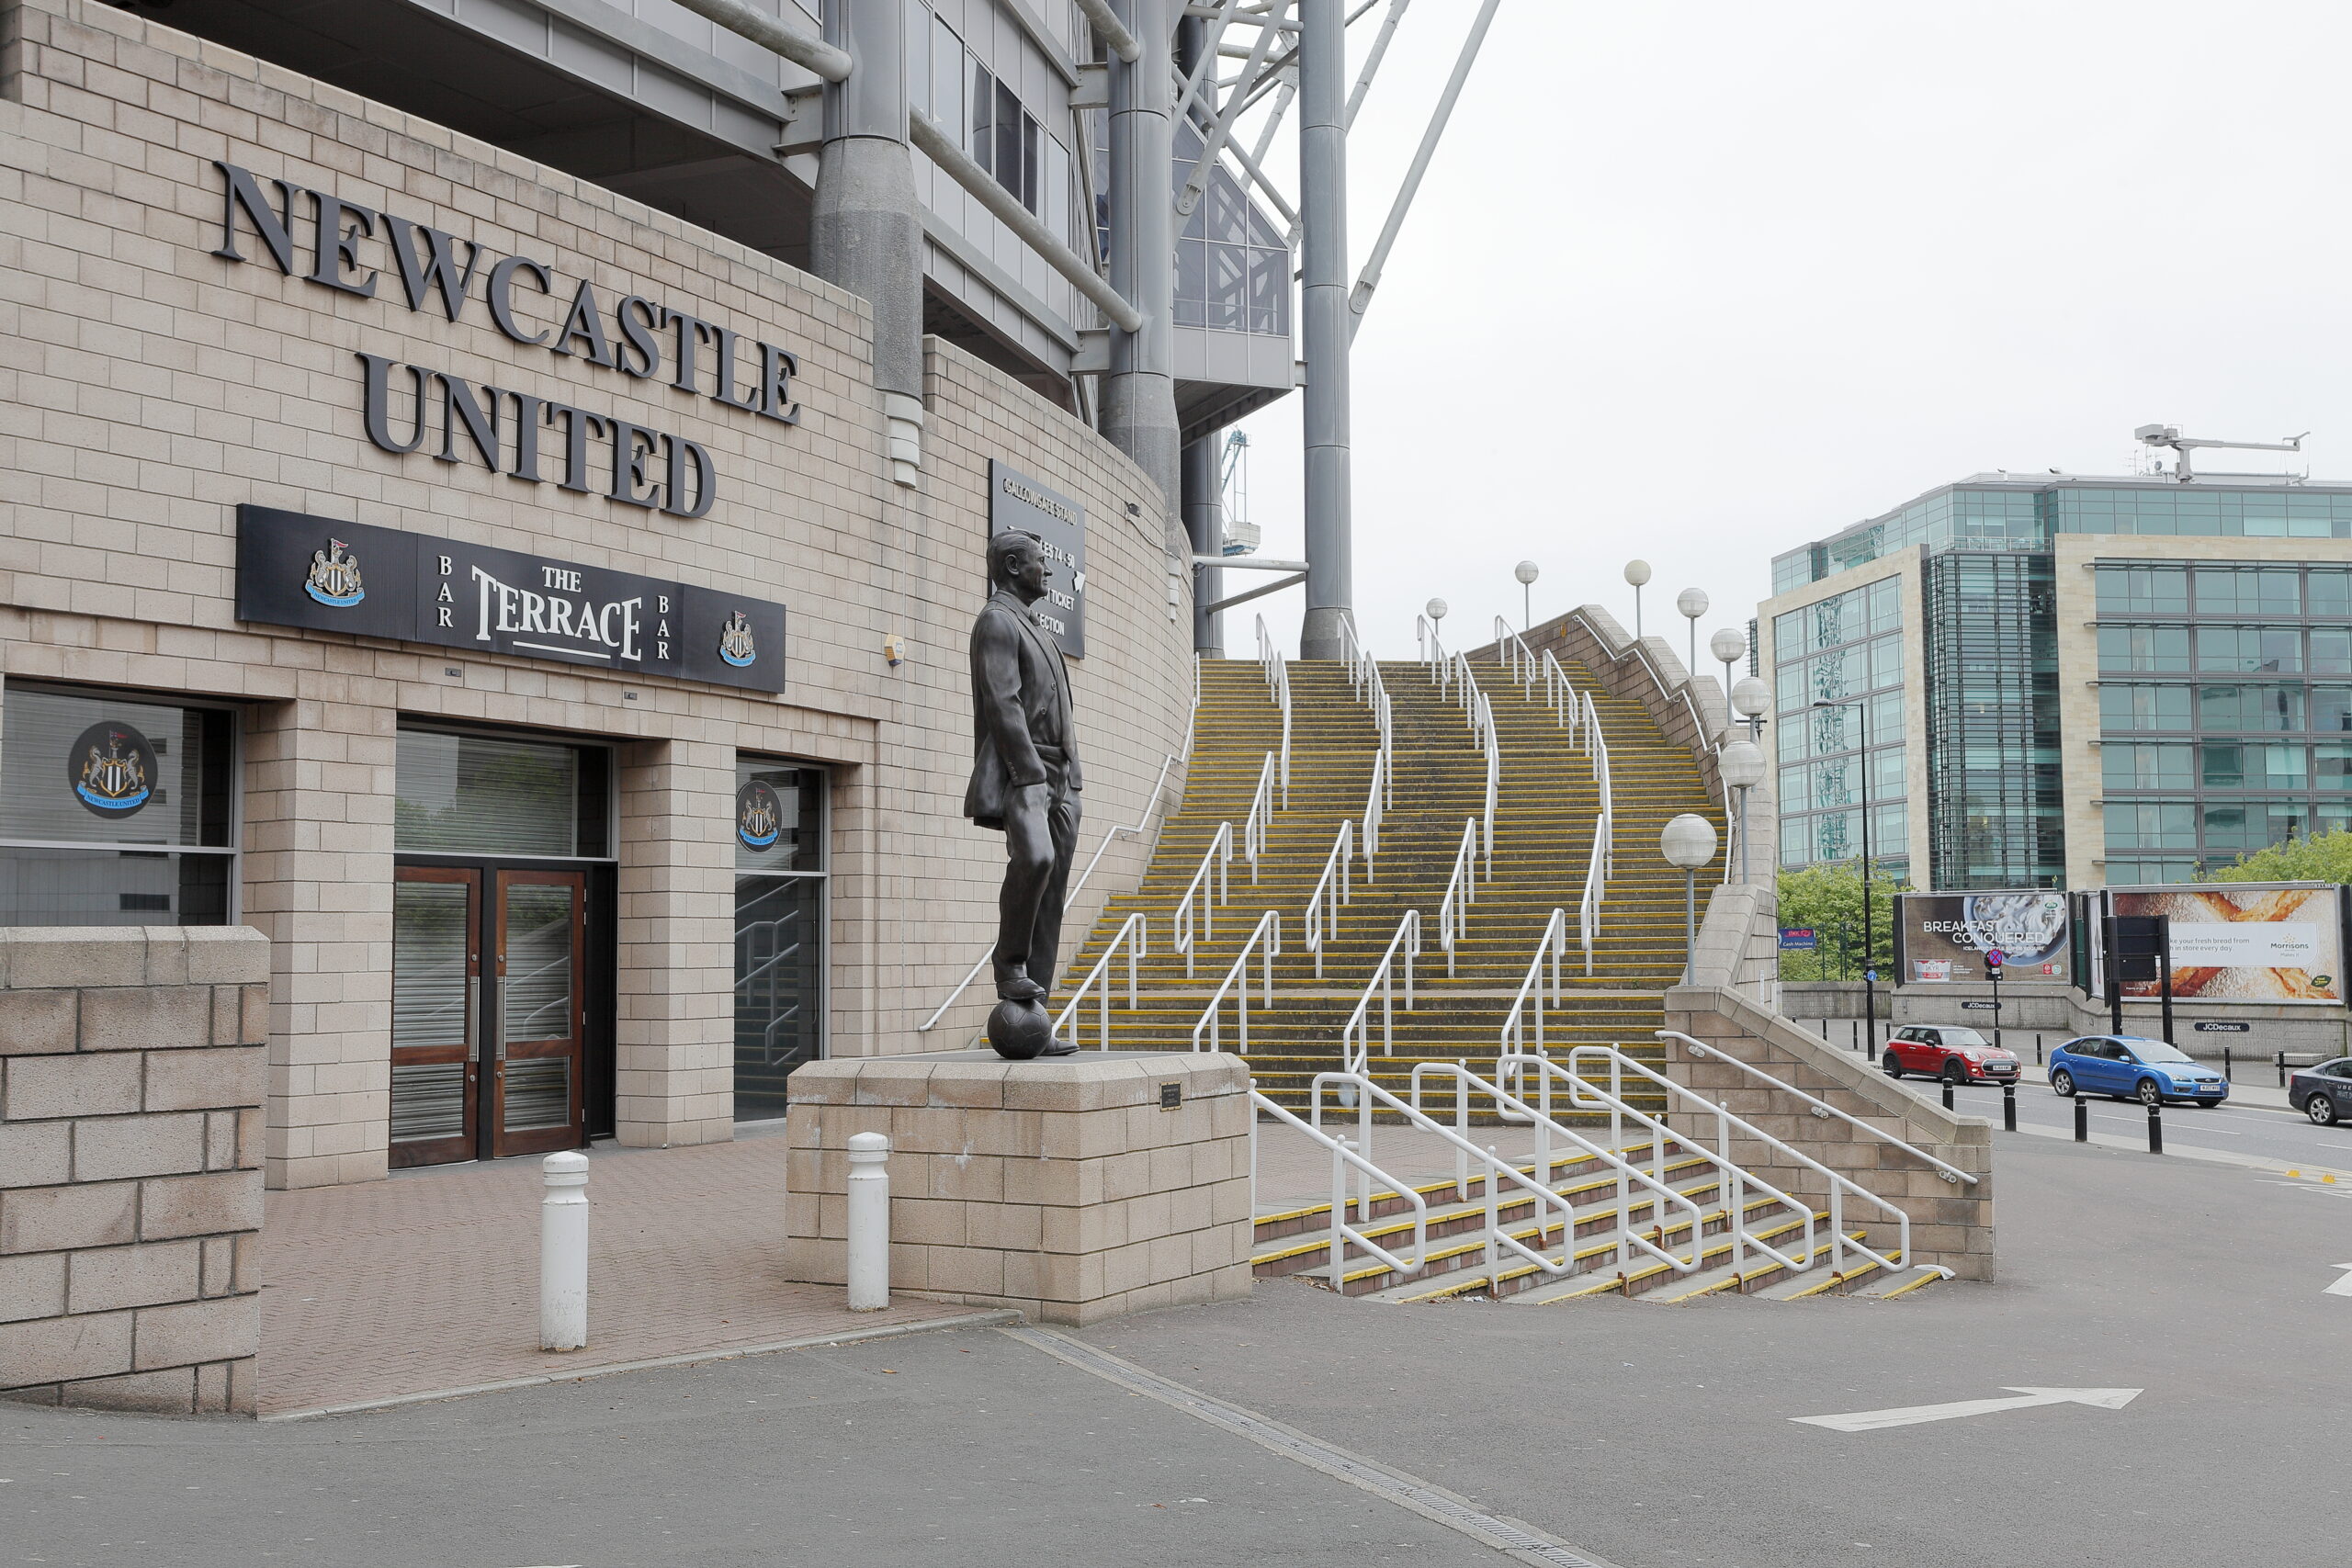 Tamlite St James' Park Case Study Newcastle United building exterior